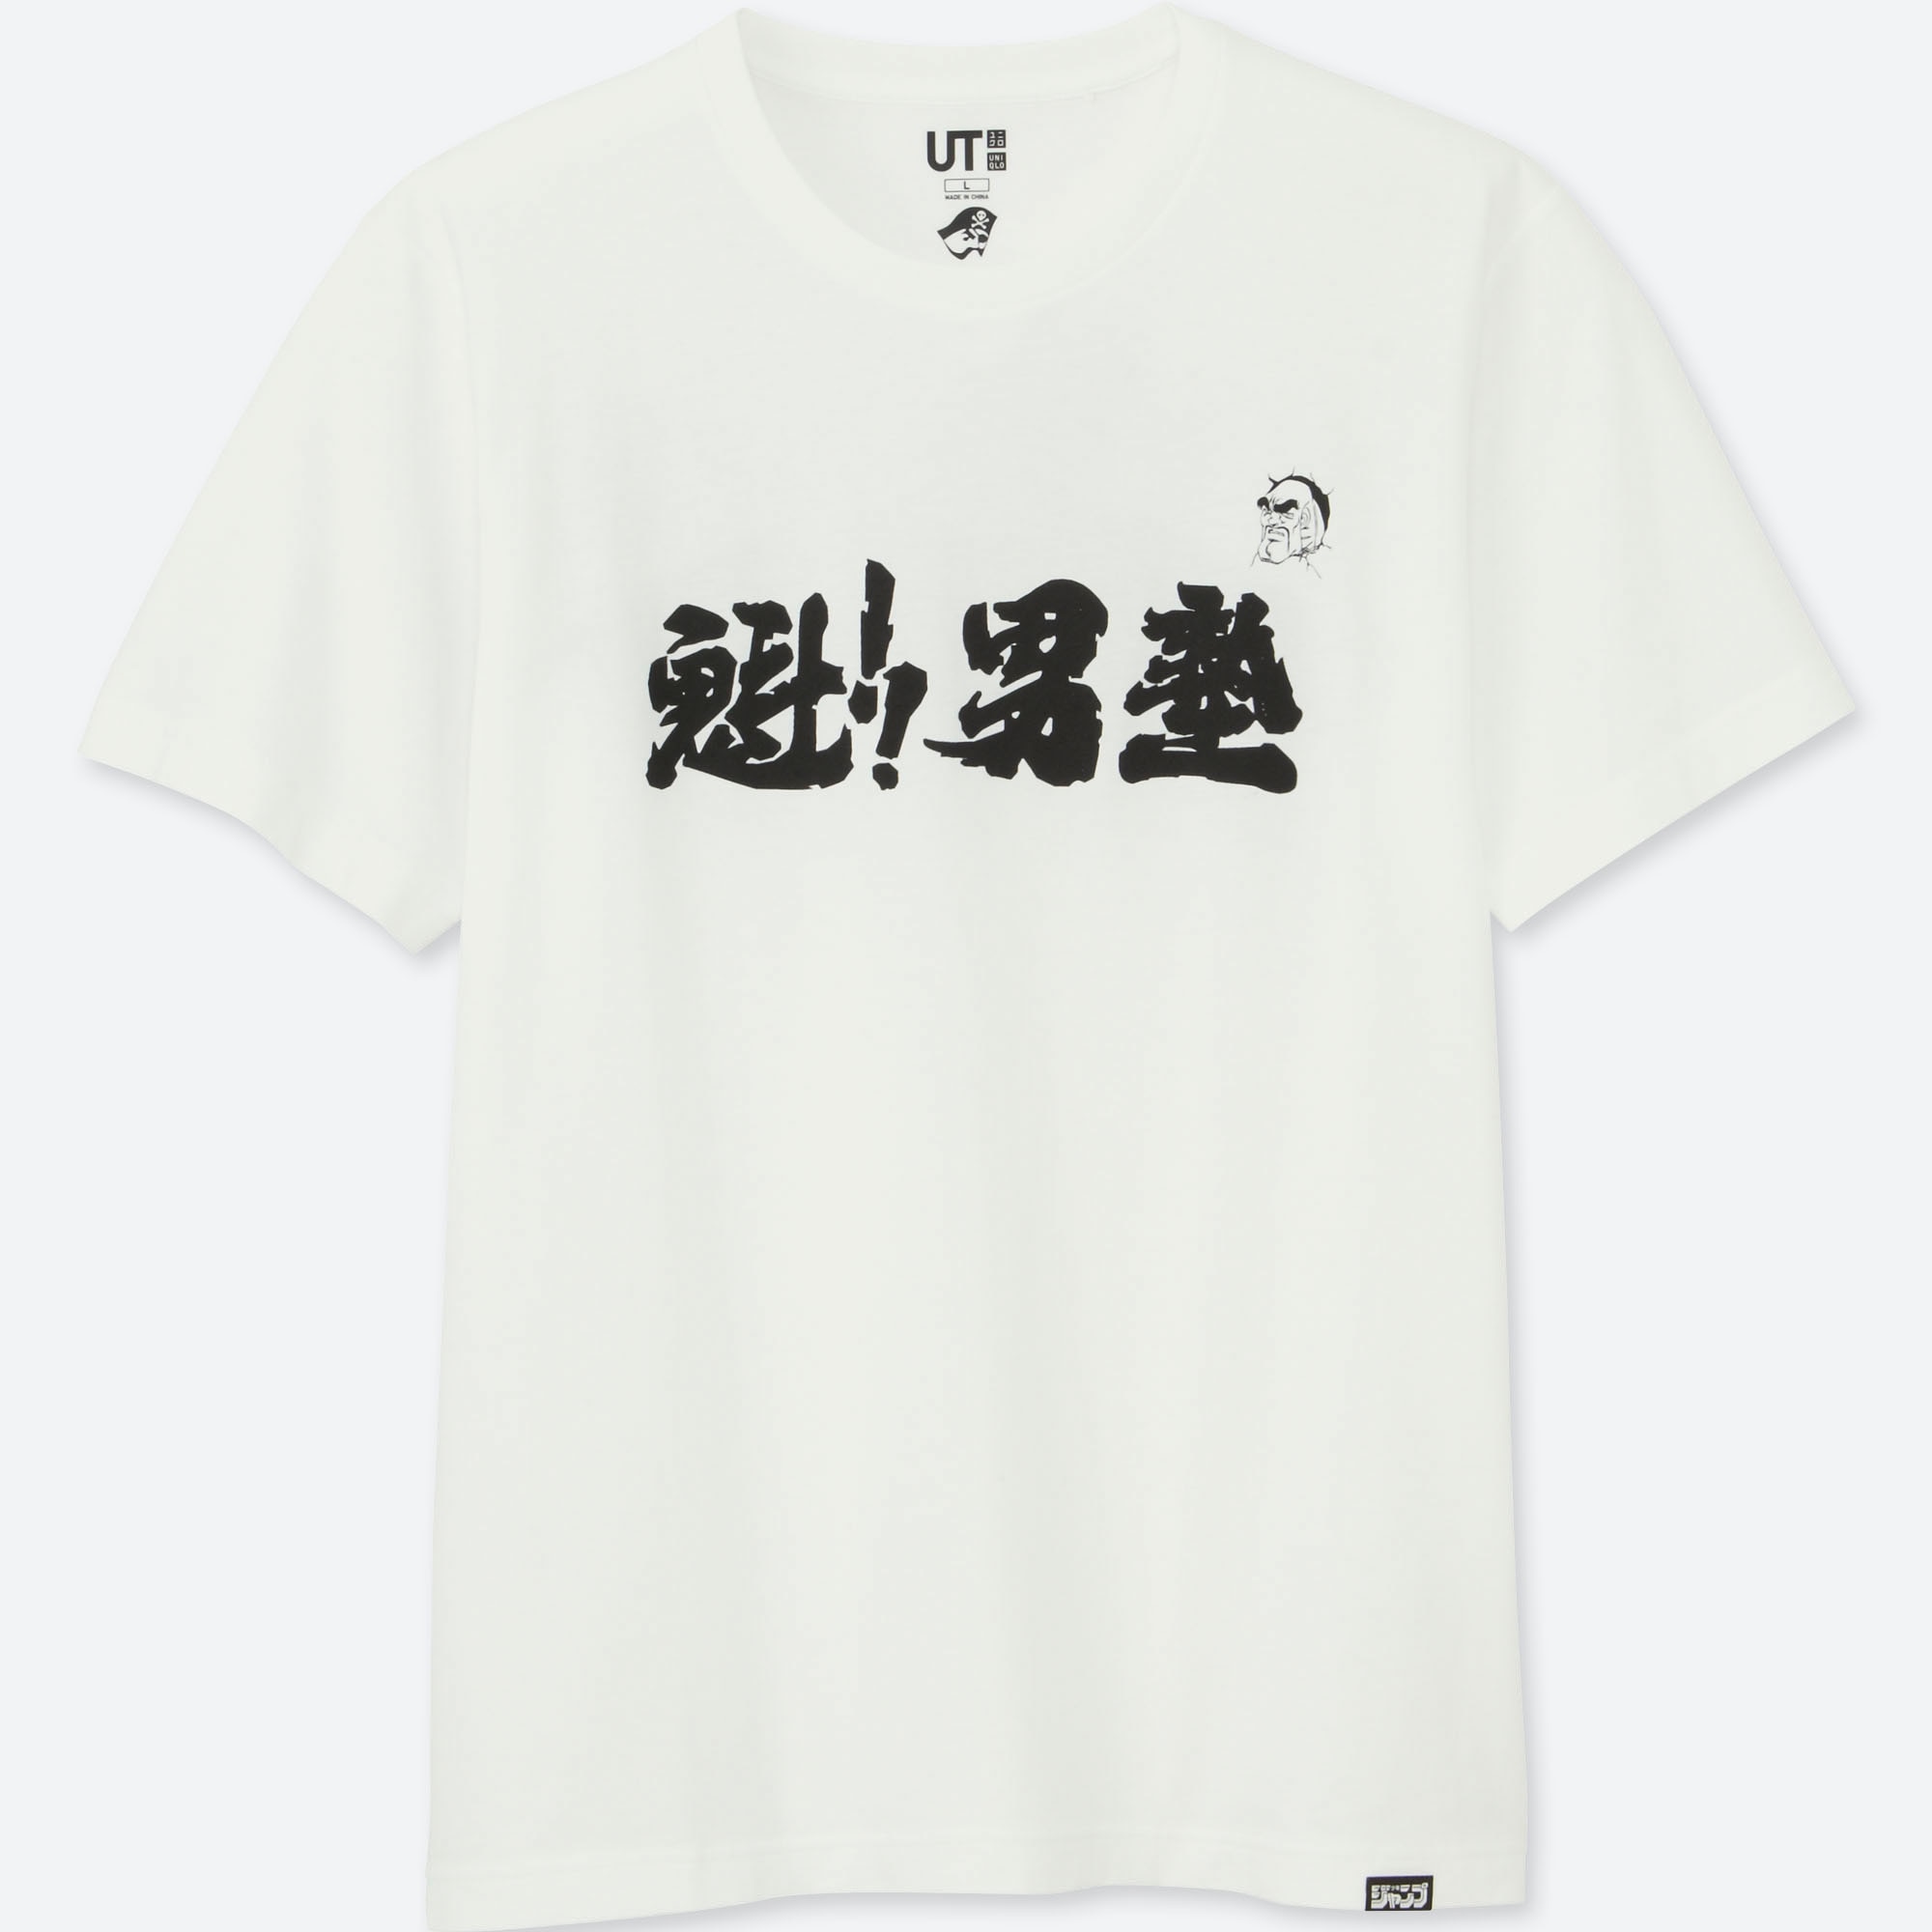 Mens UT graphic Tshirts  sweatshirts  UNIQLO UK